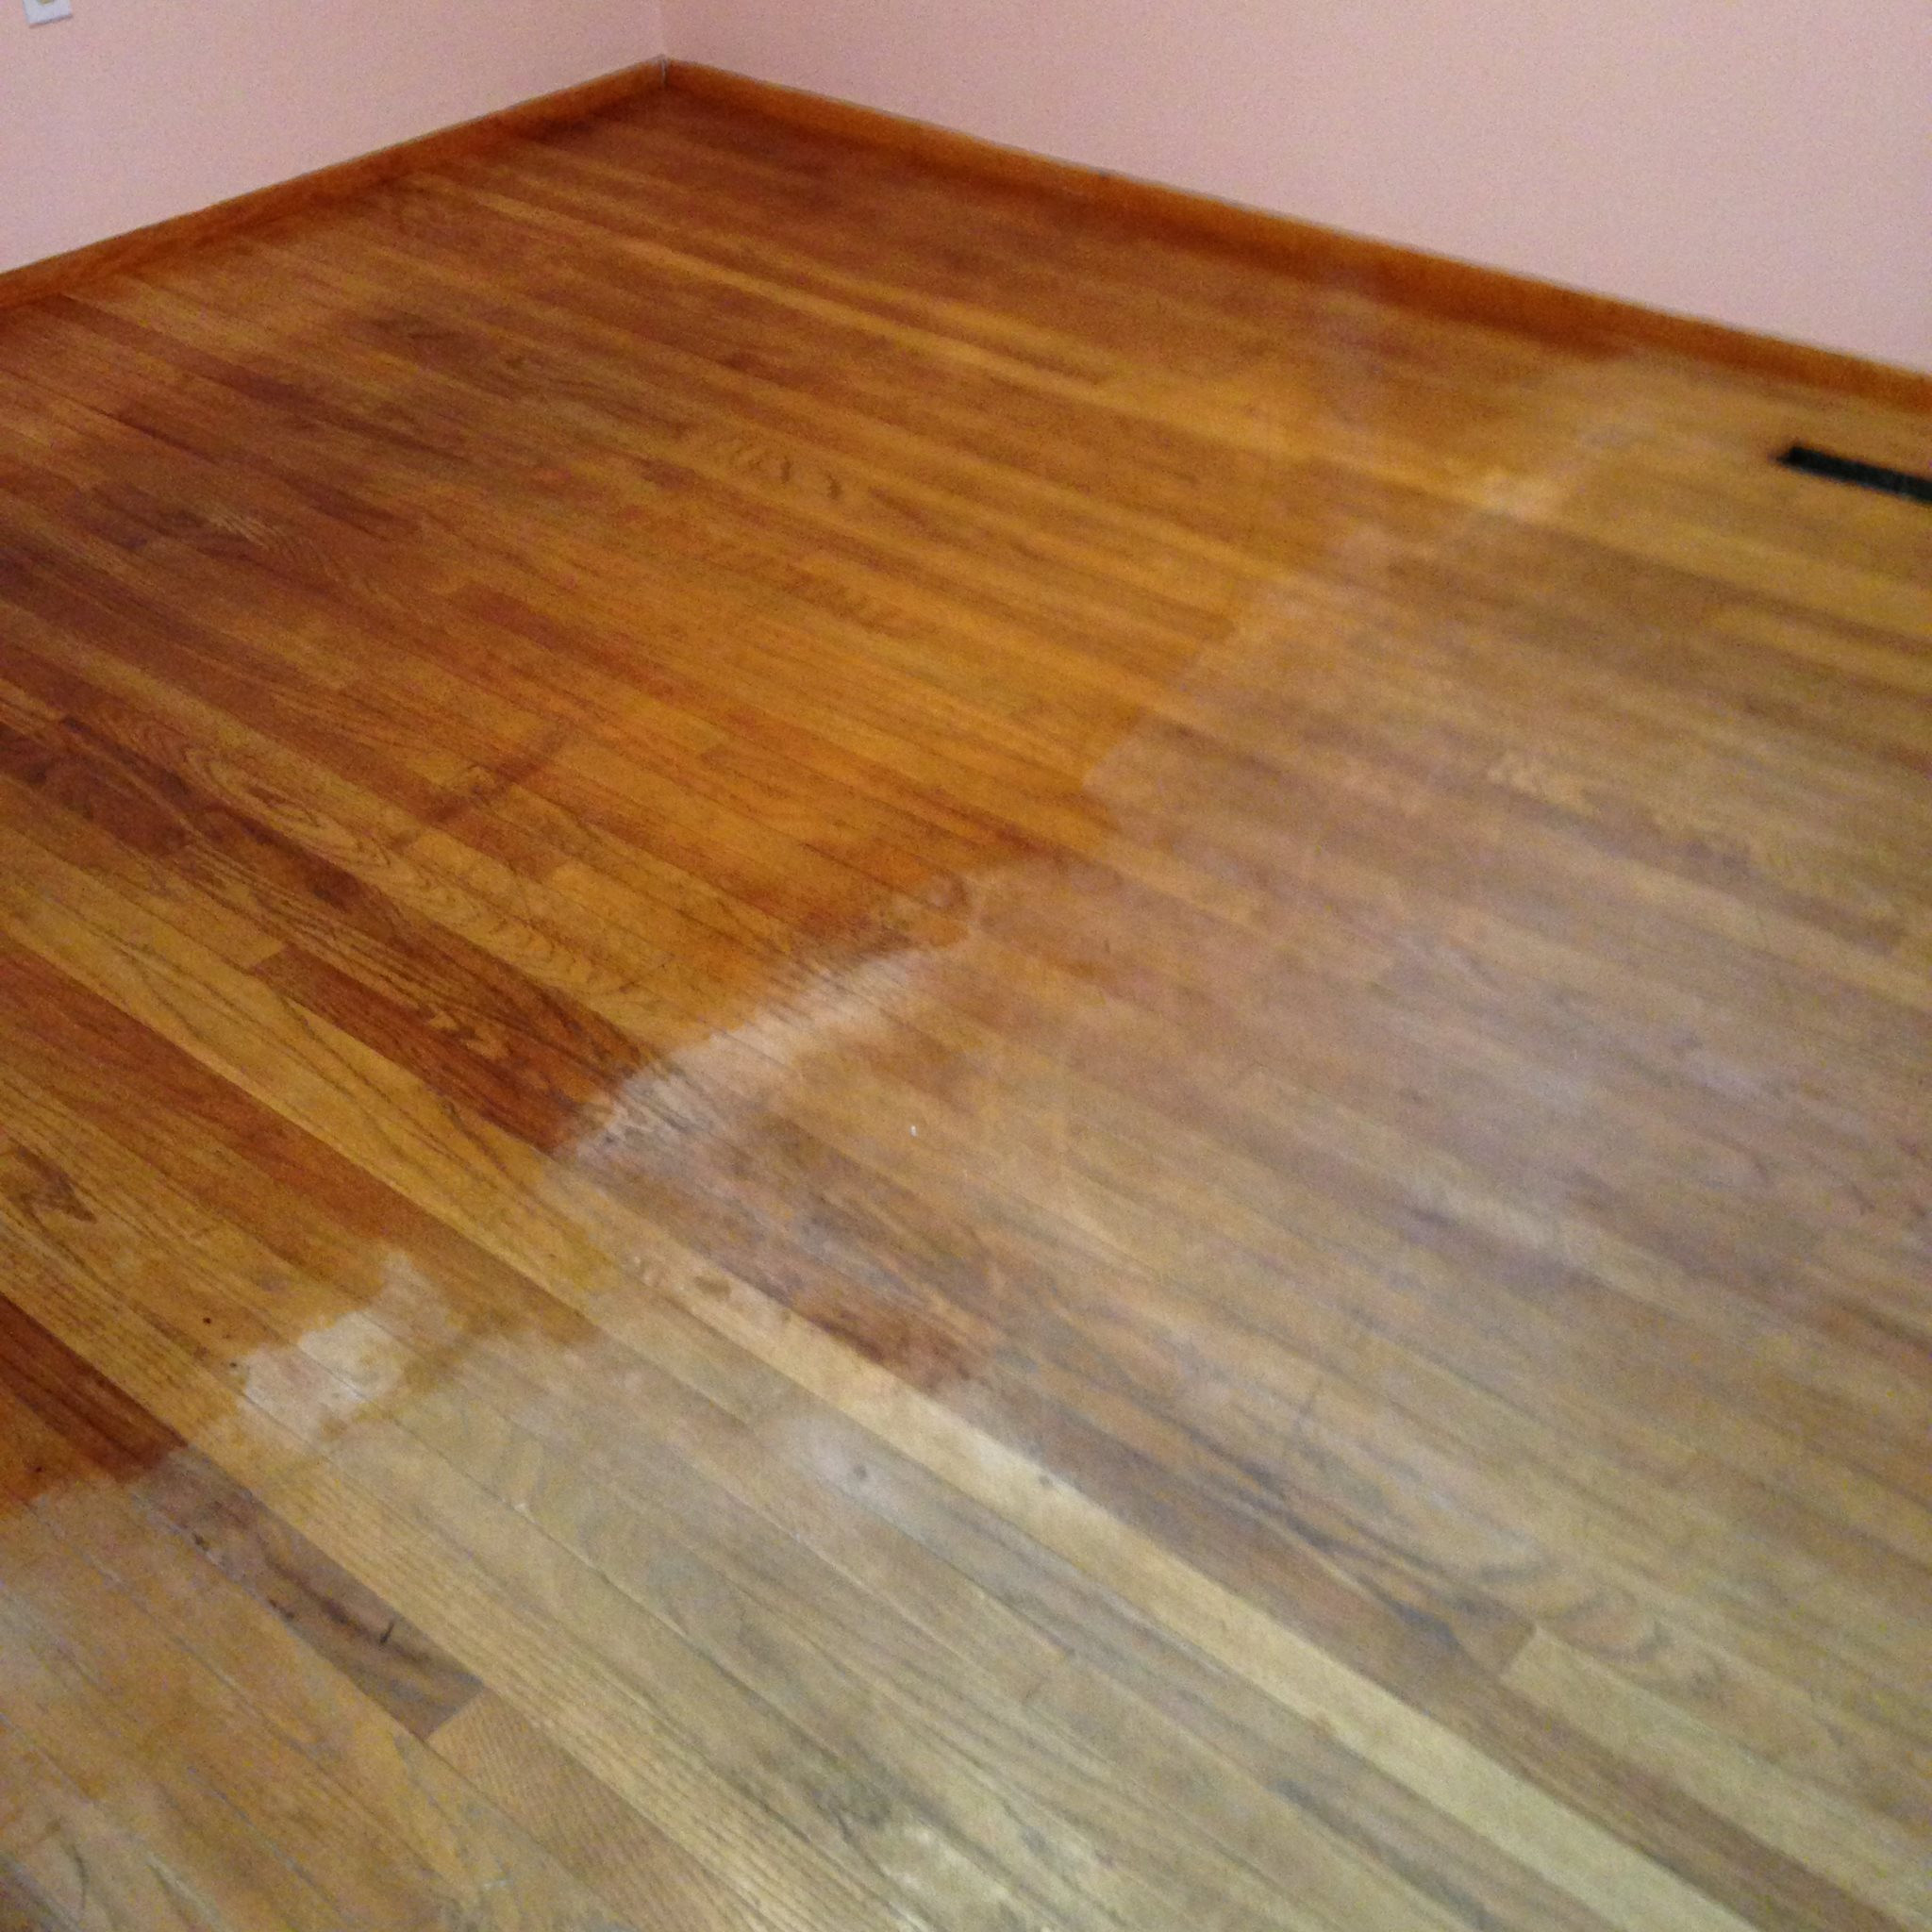 hardwood floor protectors for couch of 15 wood floor hacks every homeowner needs to know for wood floor hacks 15